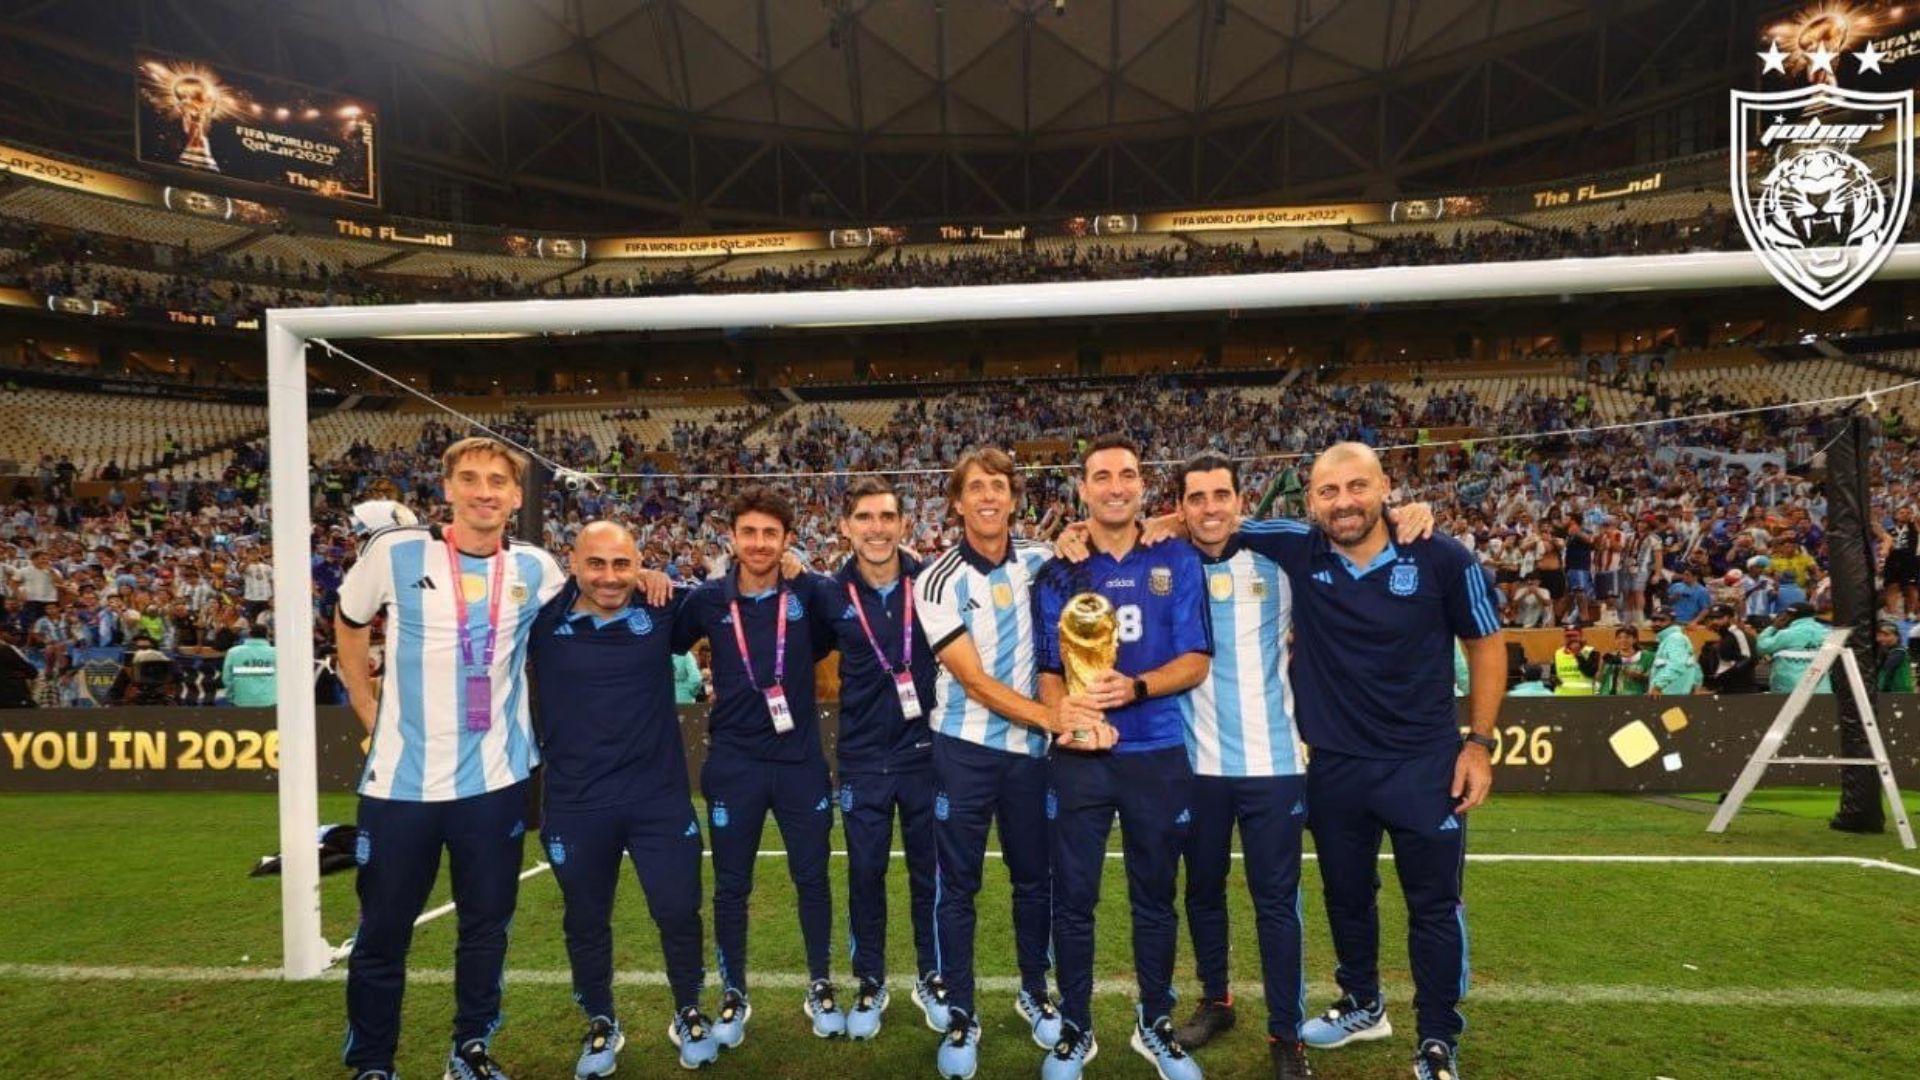 Bekas Jurulatih Kecergasan Argentina Di Piala Dunia Kini Perkuat JDT